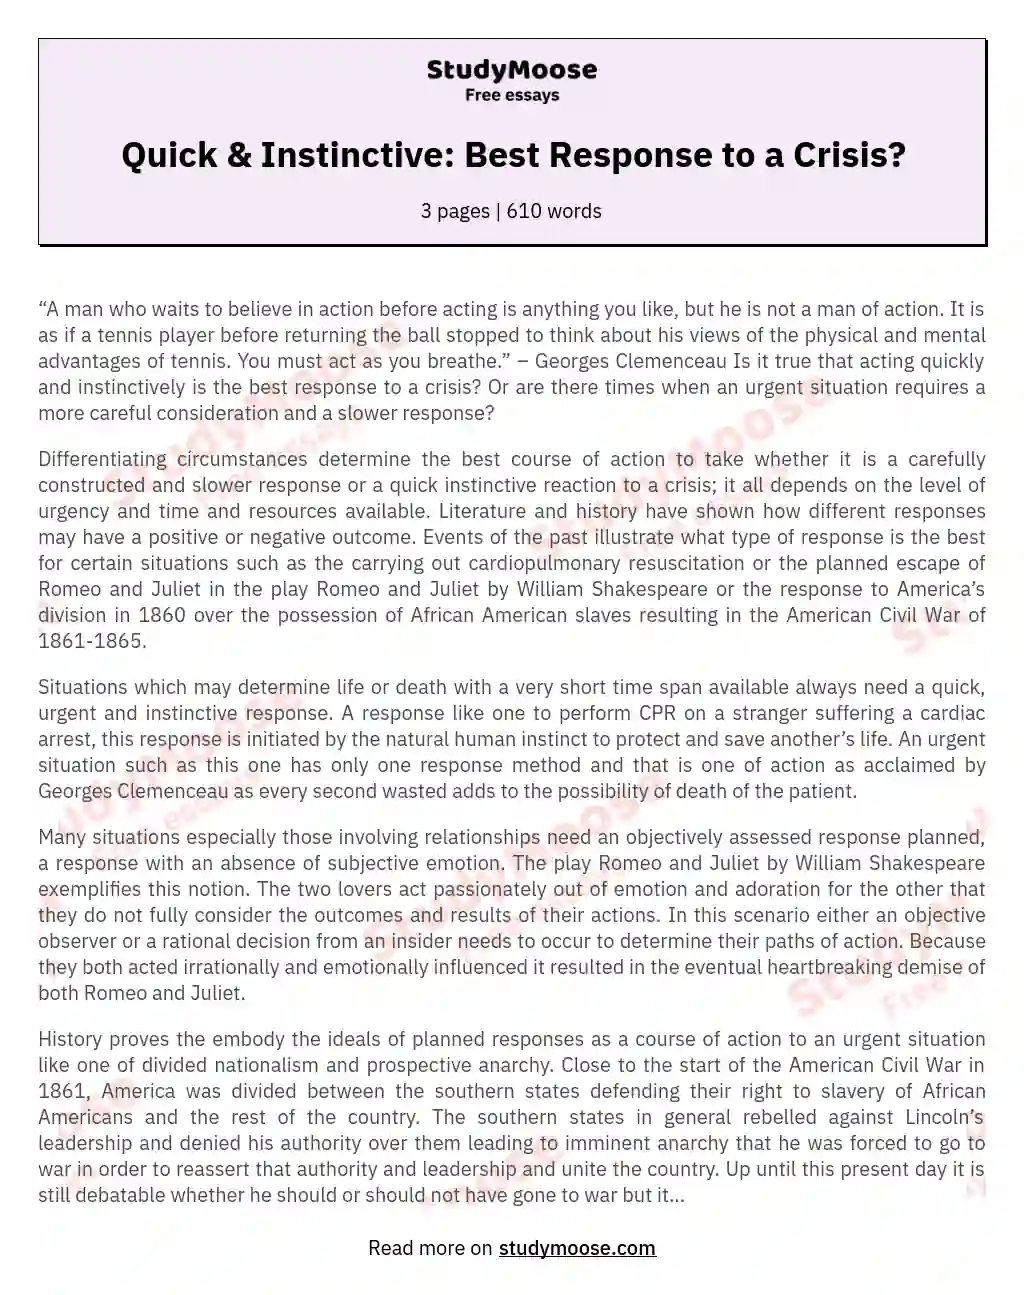 Quick & Instinctive: Best Response to a Crisis? essay